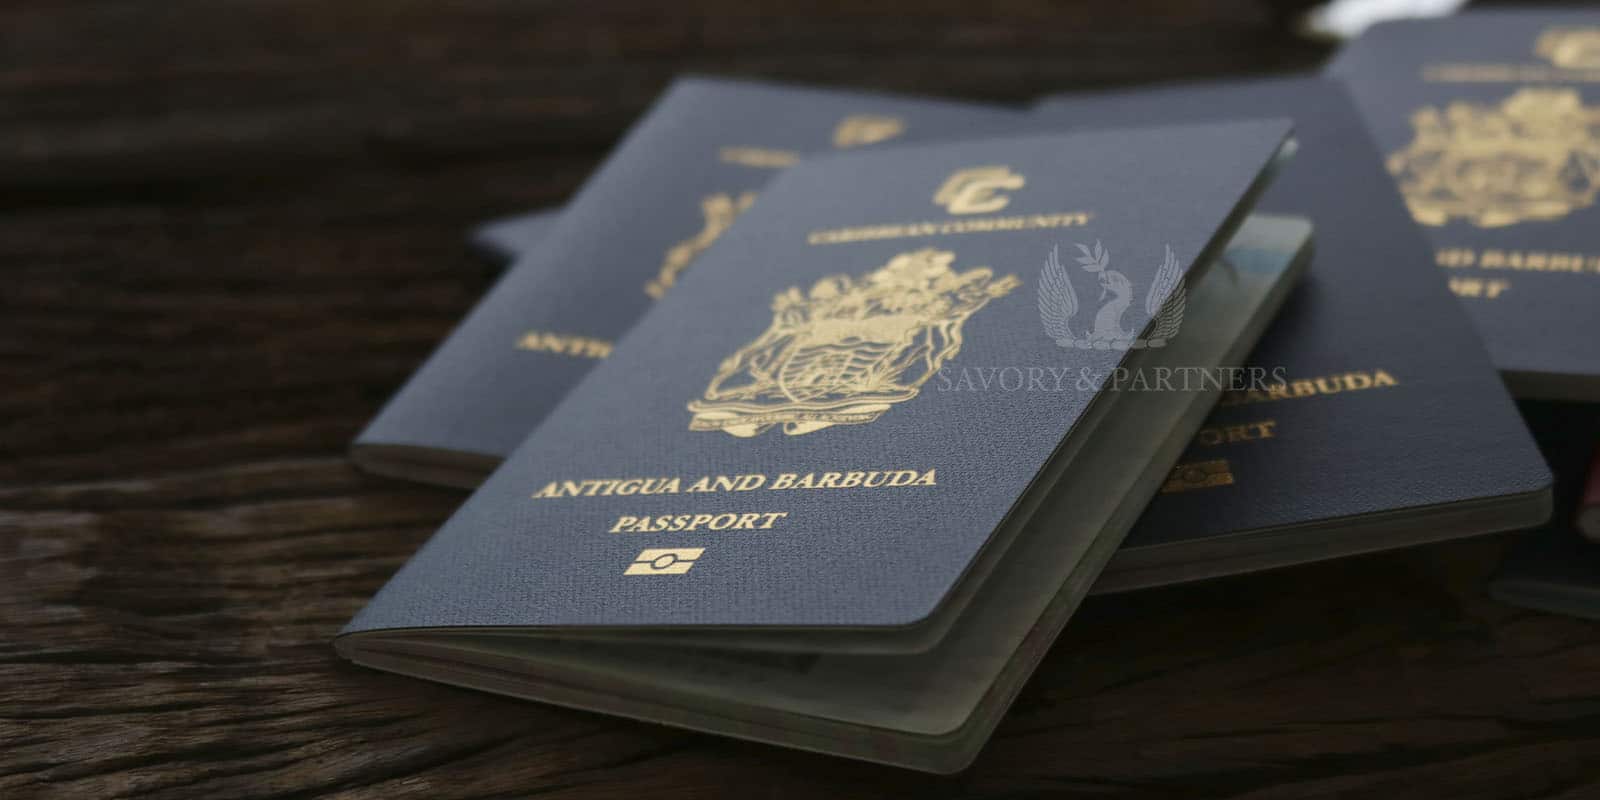 Antigua & Barbuda Passport - Savory & Partners - Dubai, UAE